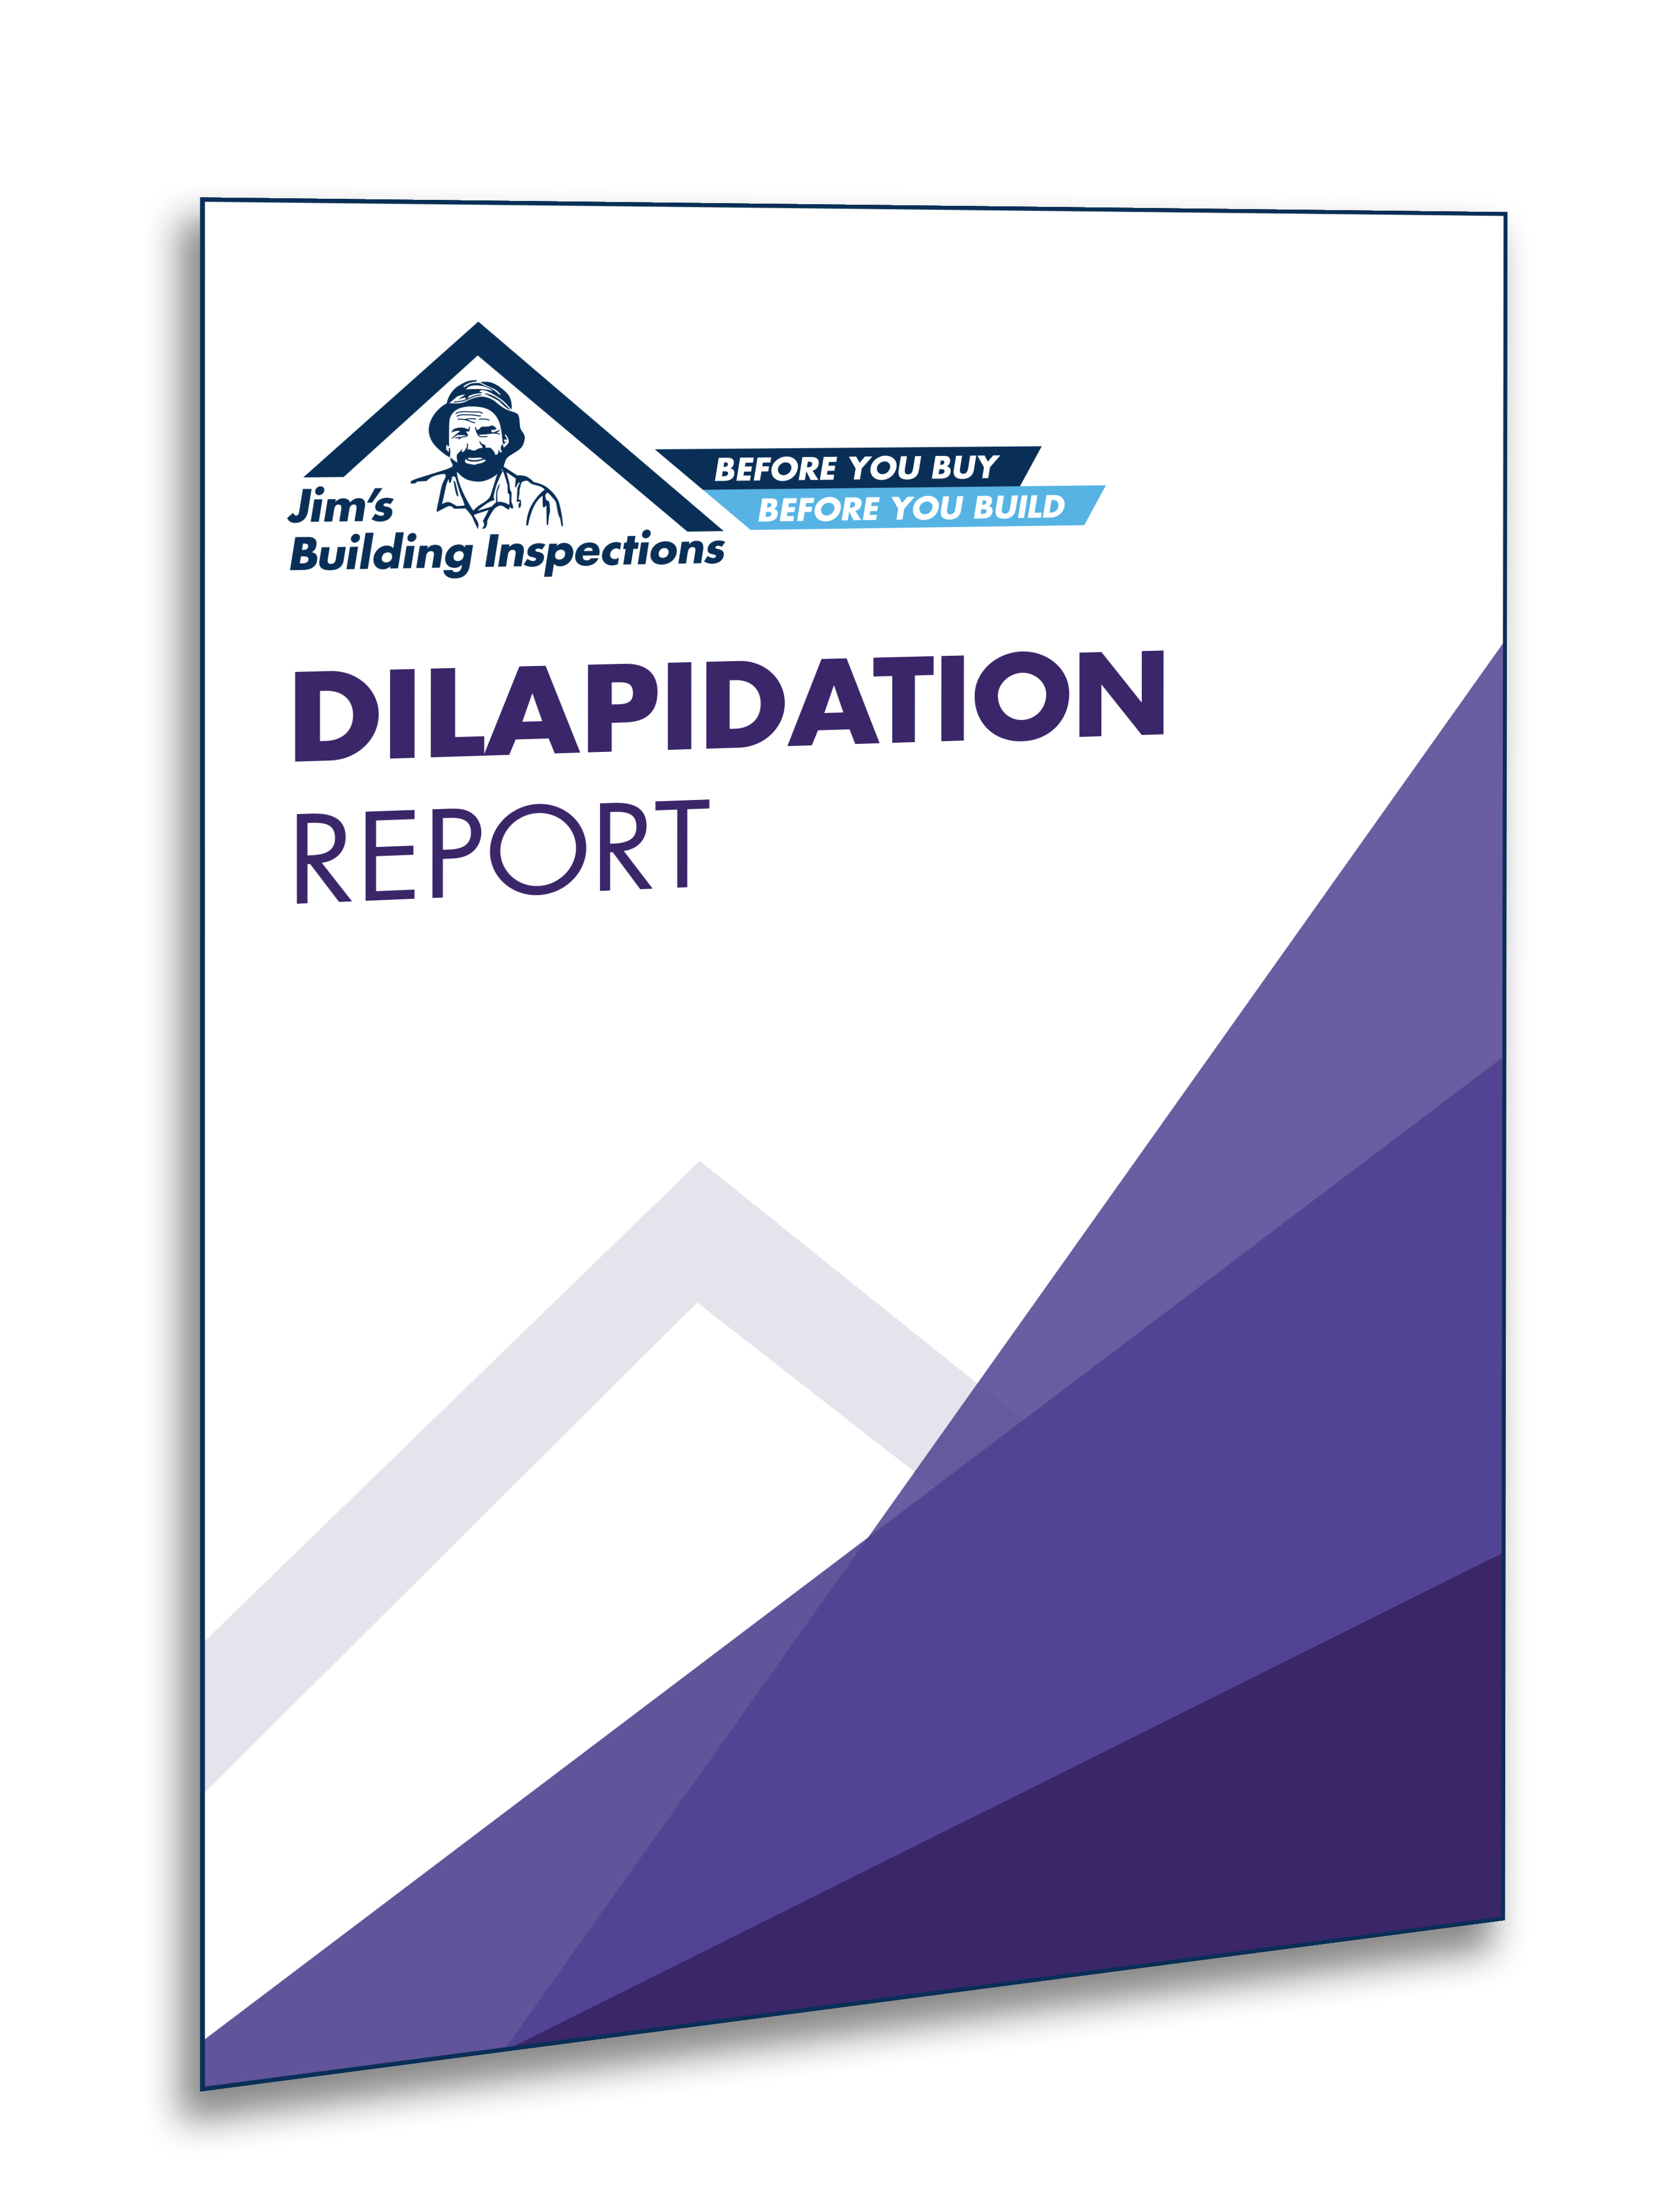 Sample Dilapidation Report